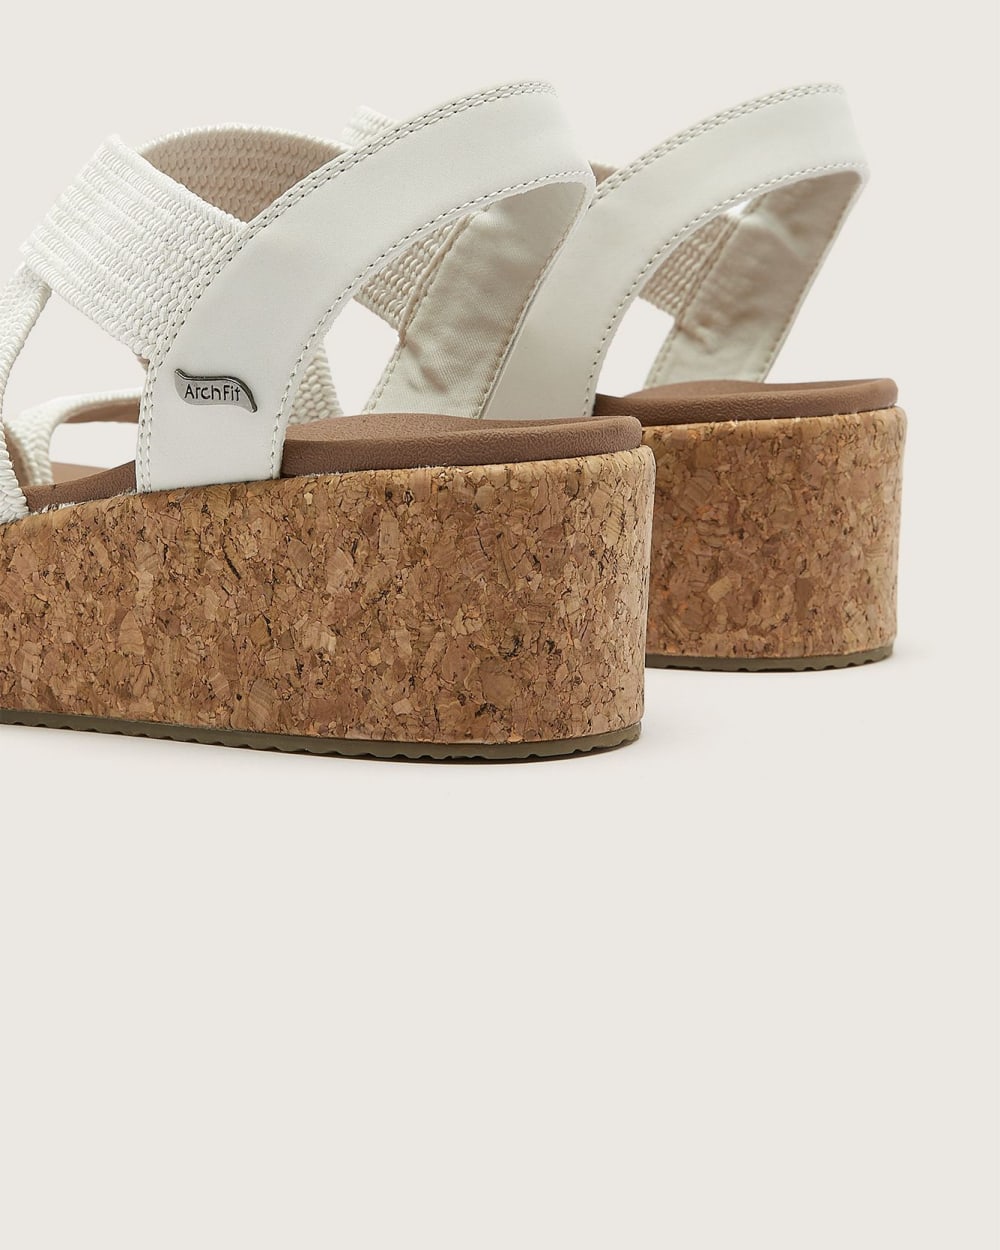 Sandale compensée Arch Fit Beverlee, pied large - Skechers